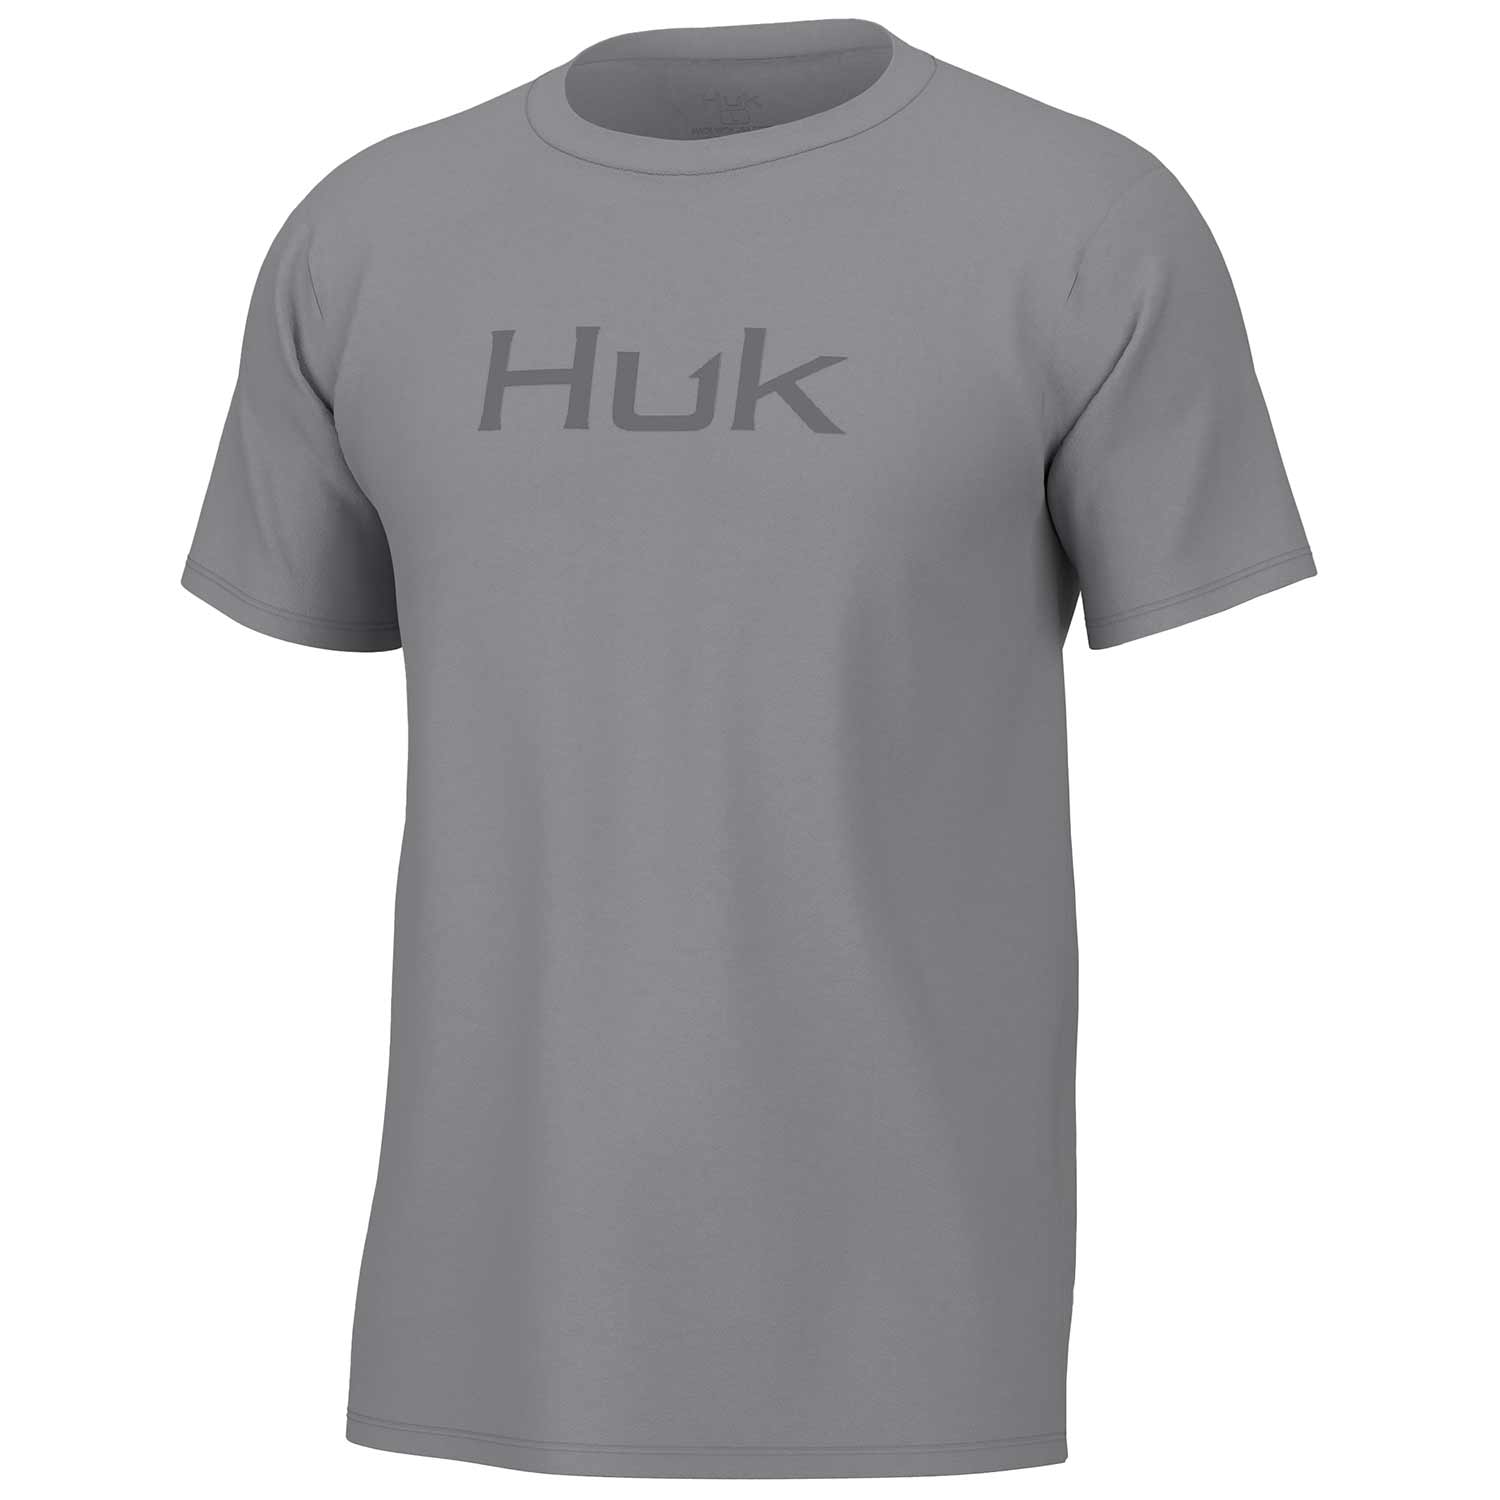 HUK Men's Huk Logo Shirt